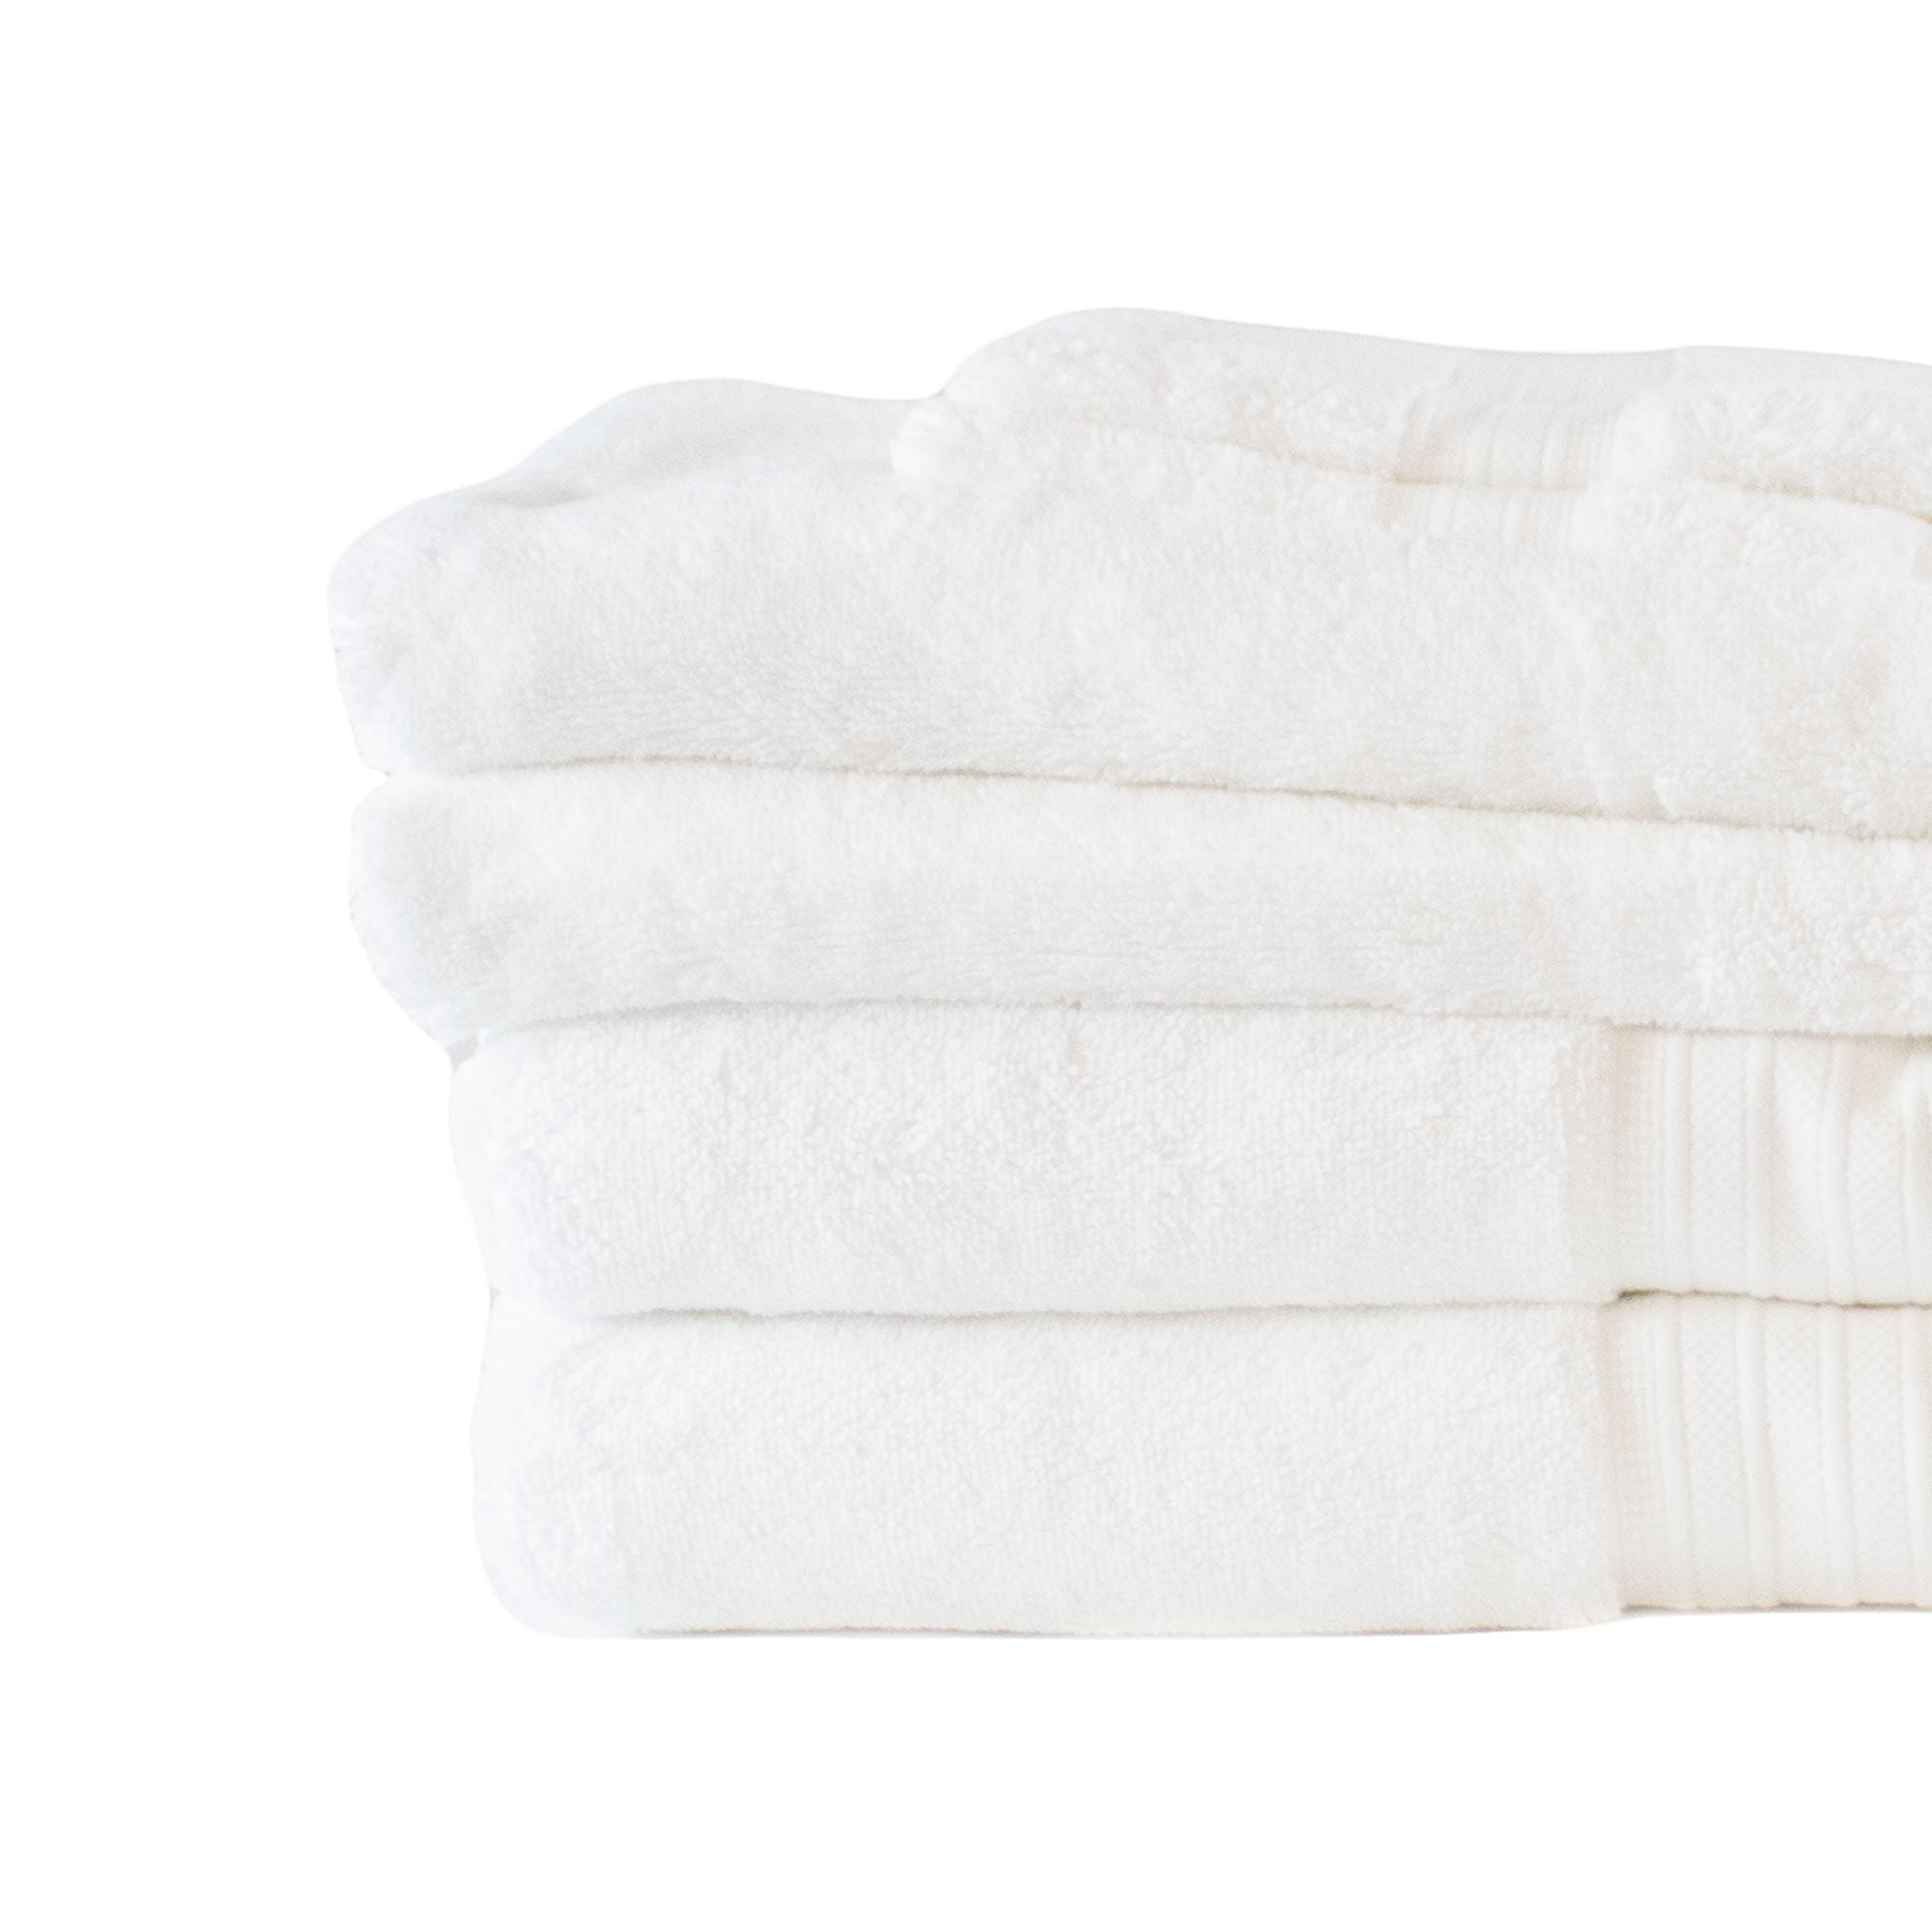 900 GSM Egyptian Cotton Bath Sheet Set of 2, Thick & Plush Oversized Body  Towels